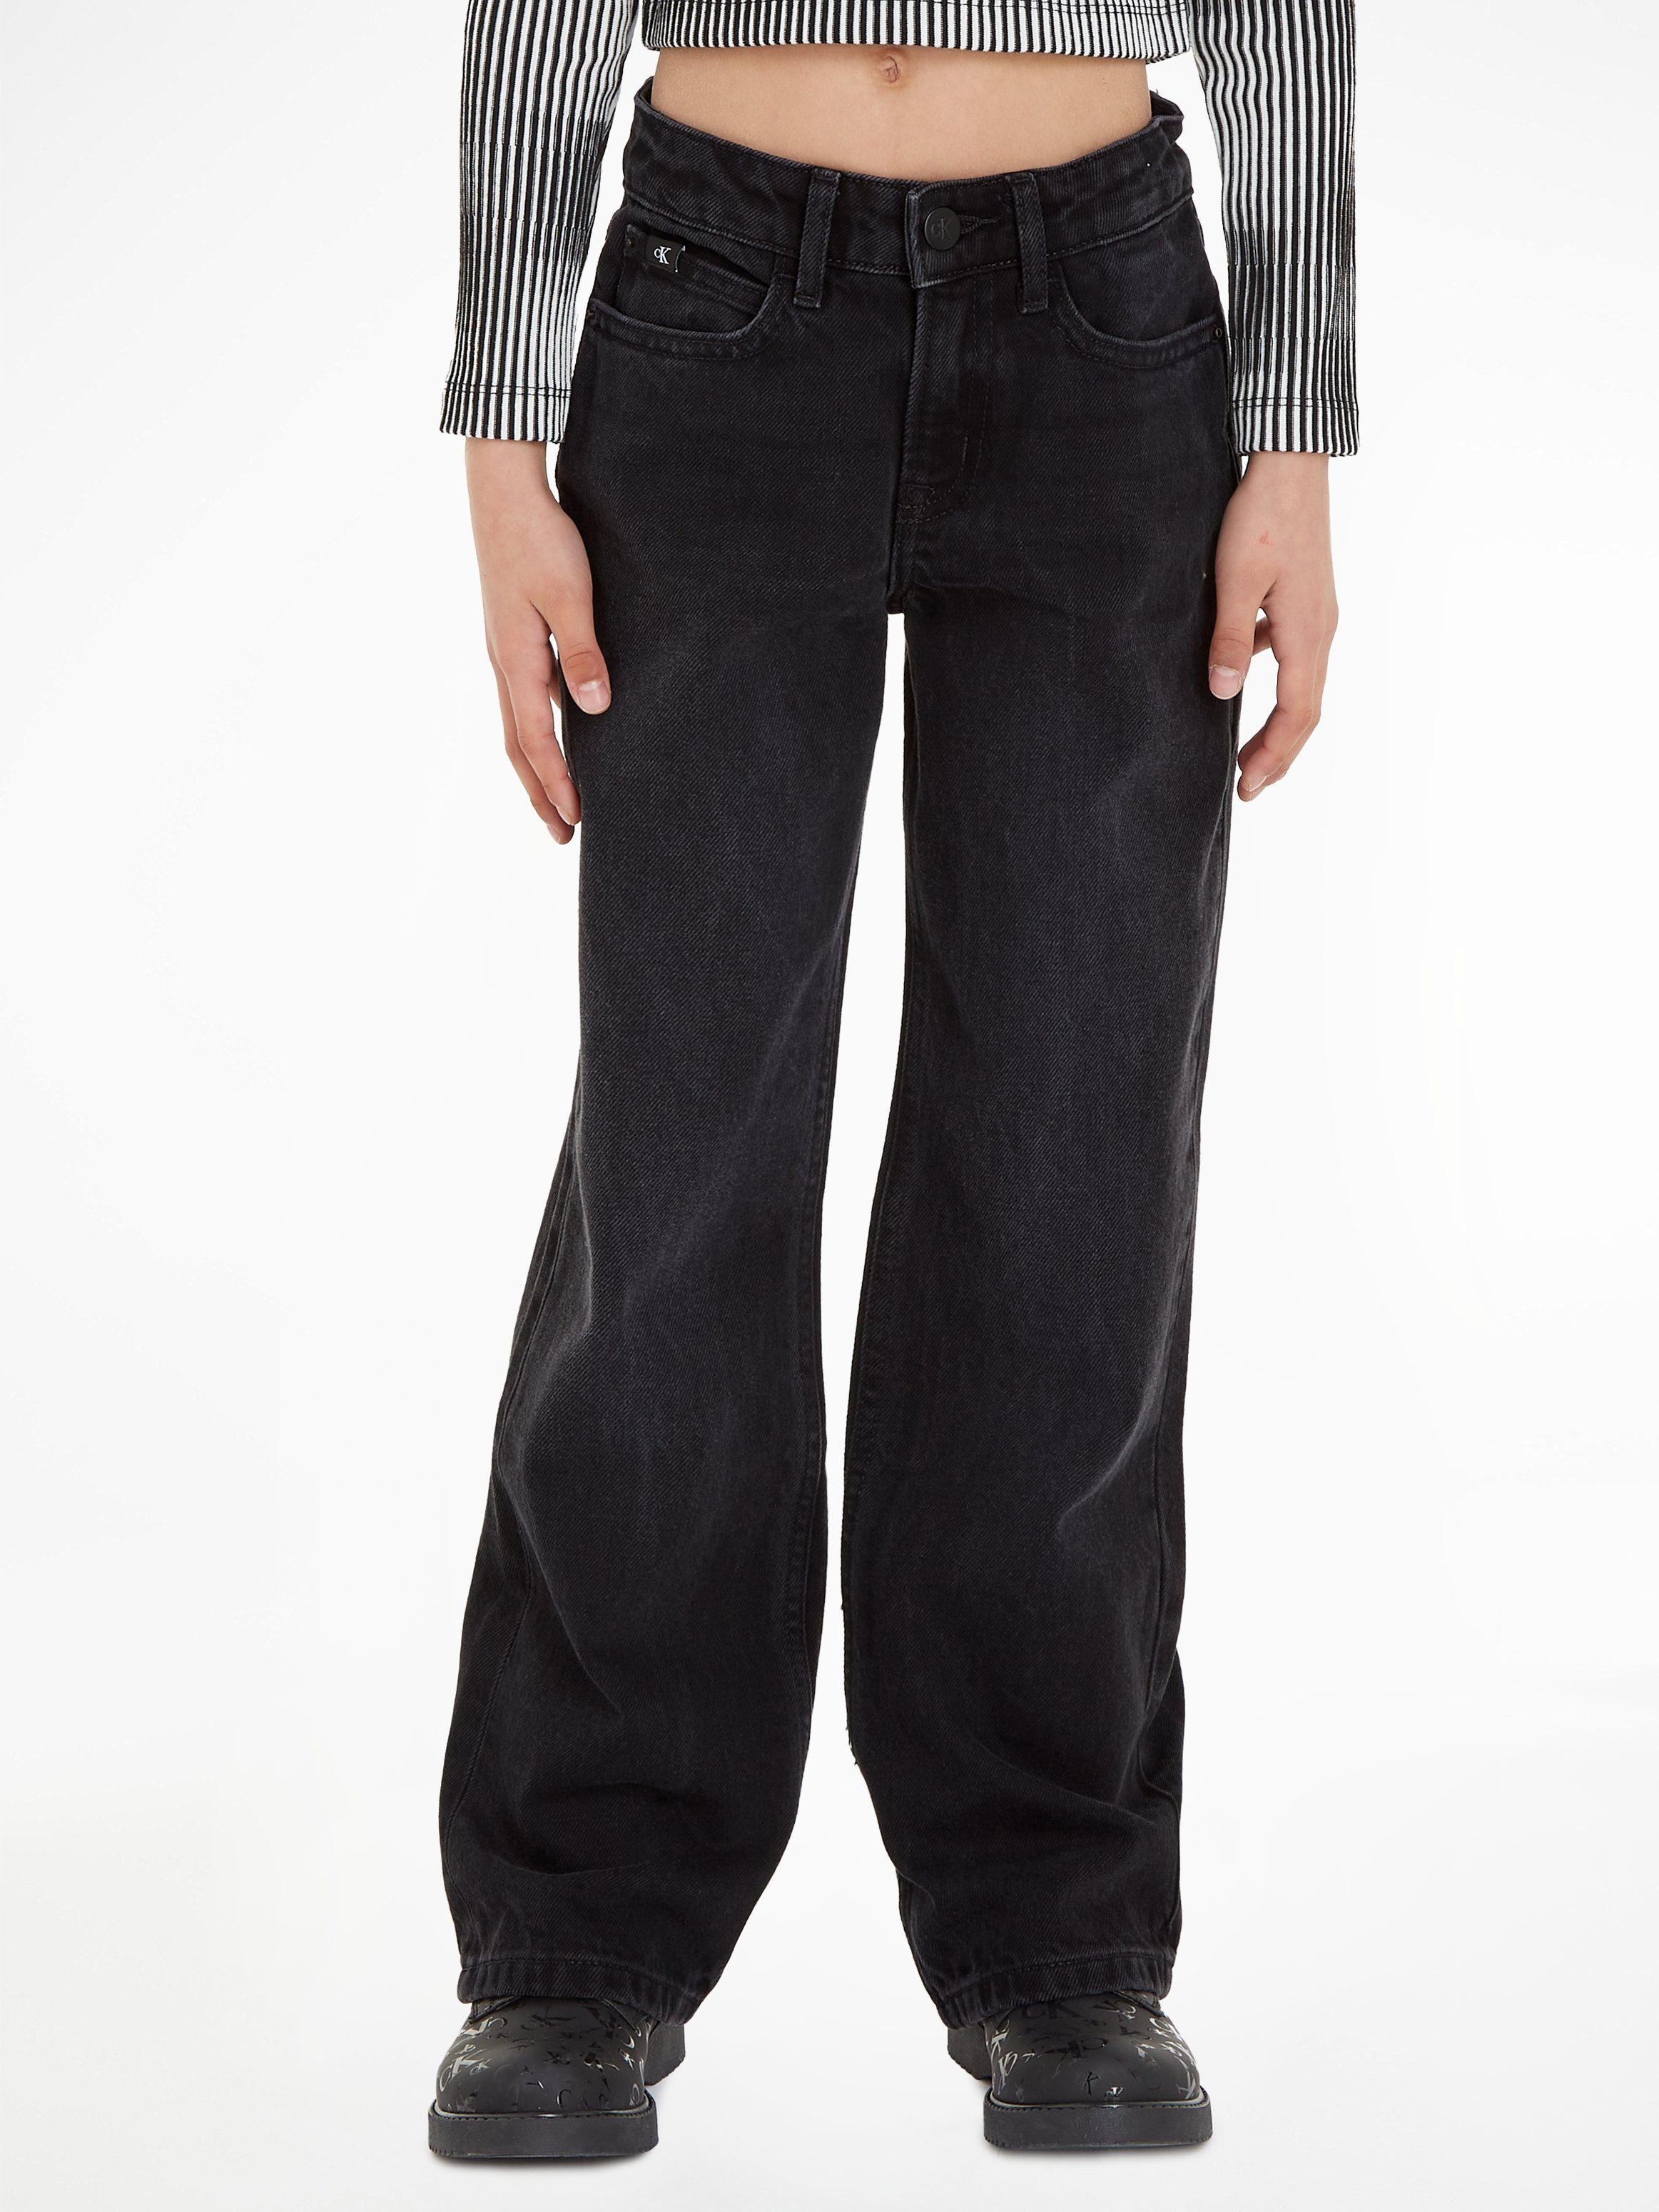 Jeans Stretch-Jeans LEG Calvin WASHED Klein WIDE BLACK